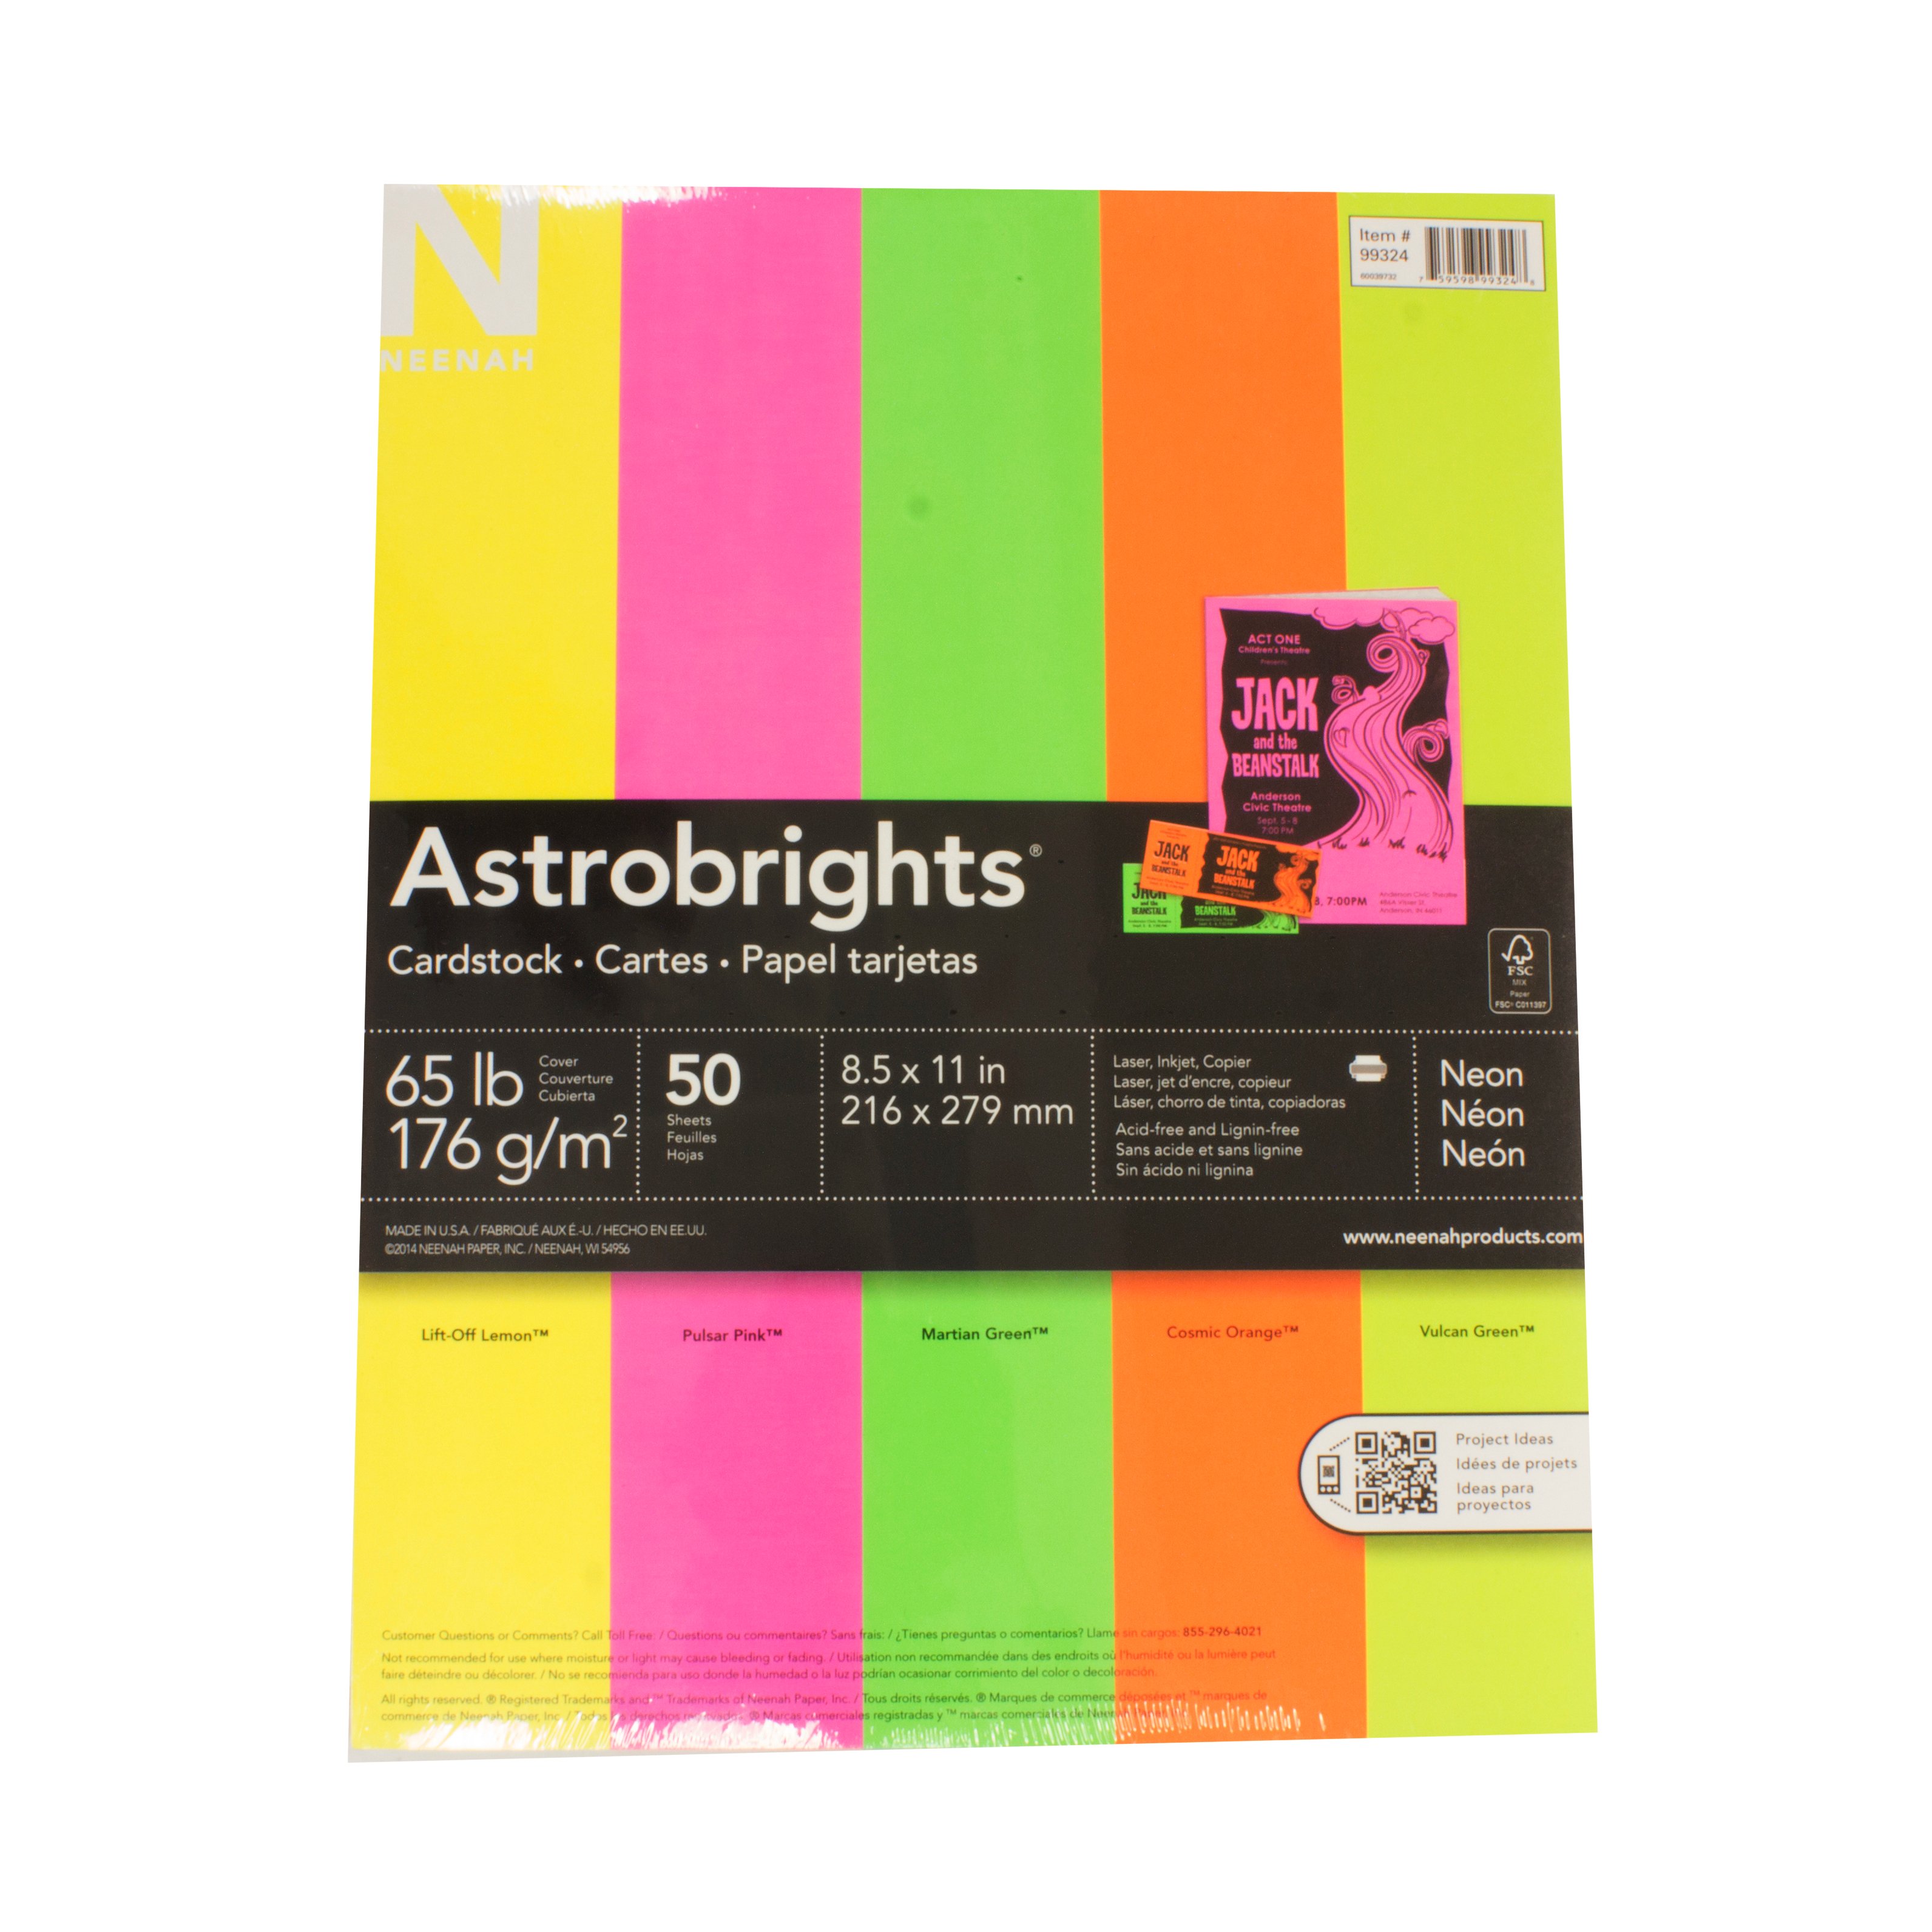 Astrobrights Cardstock Neon - Shop Copy Paper at H-E-B